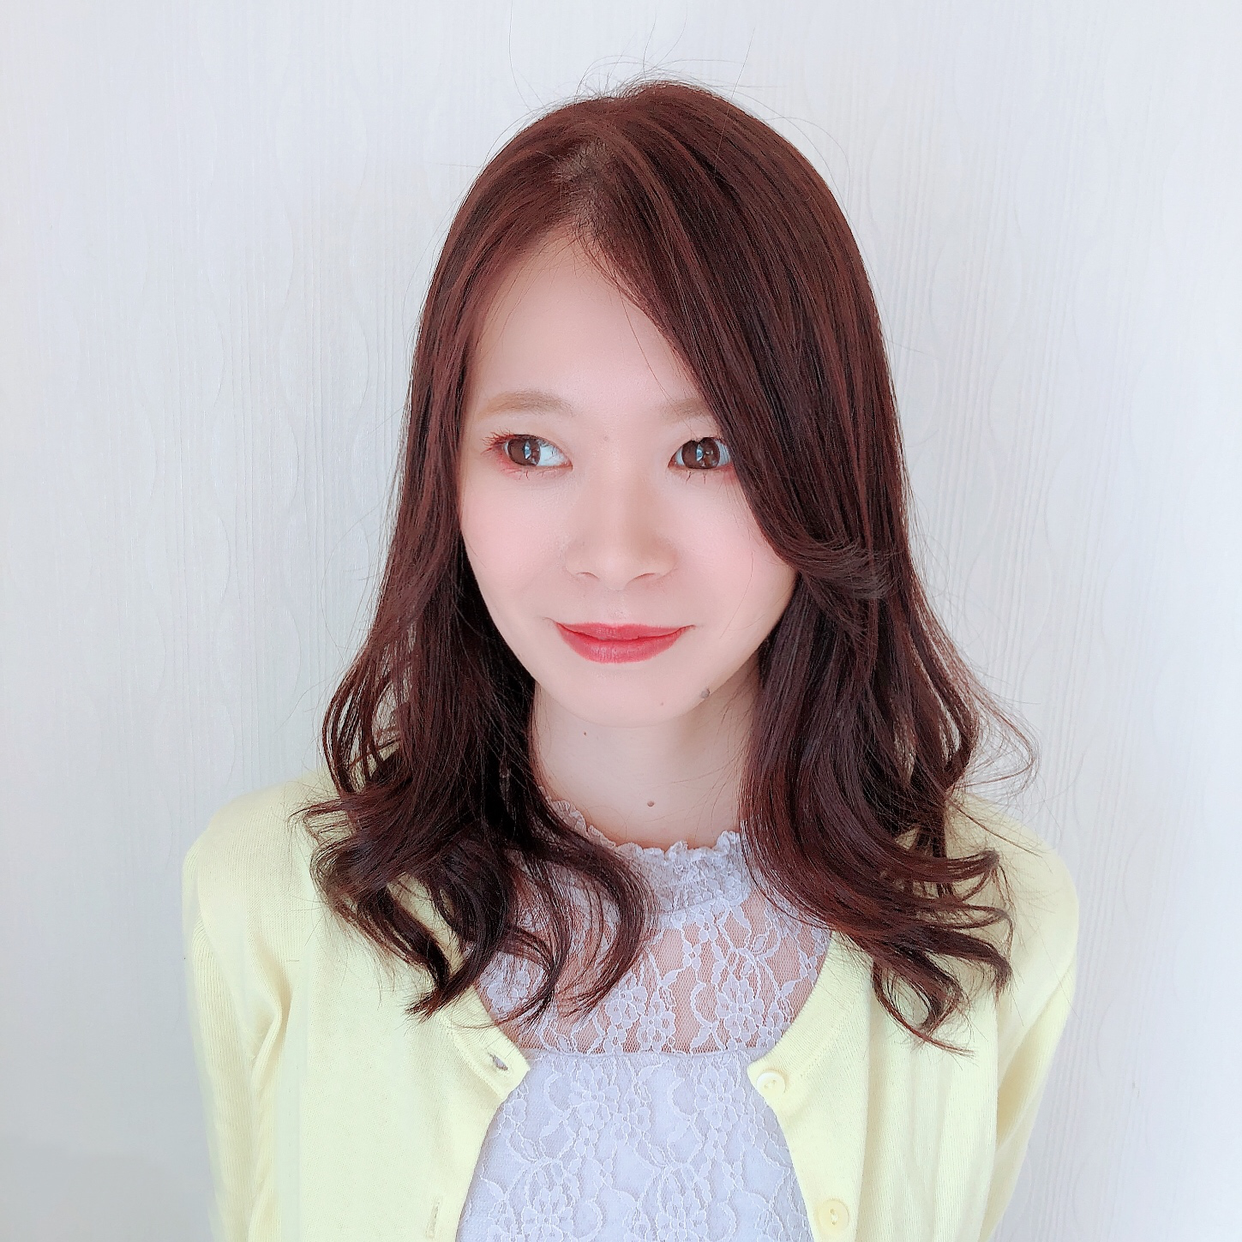 Kaori / 女性のプロフィール画像